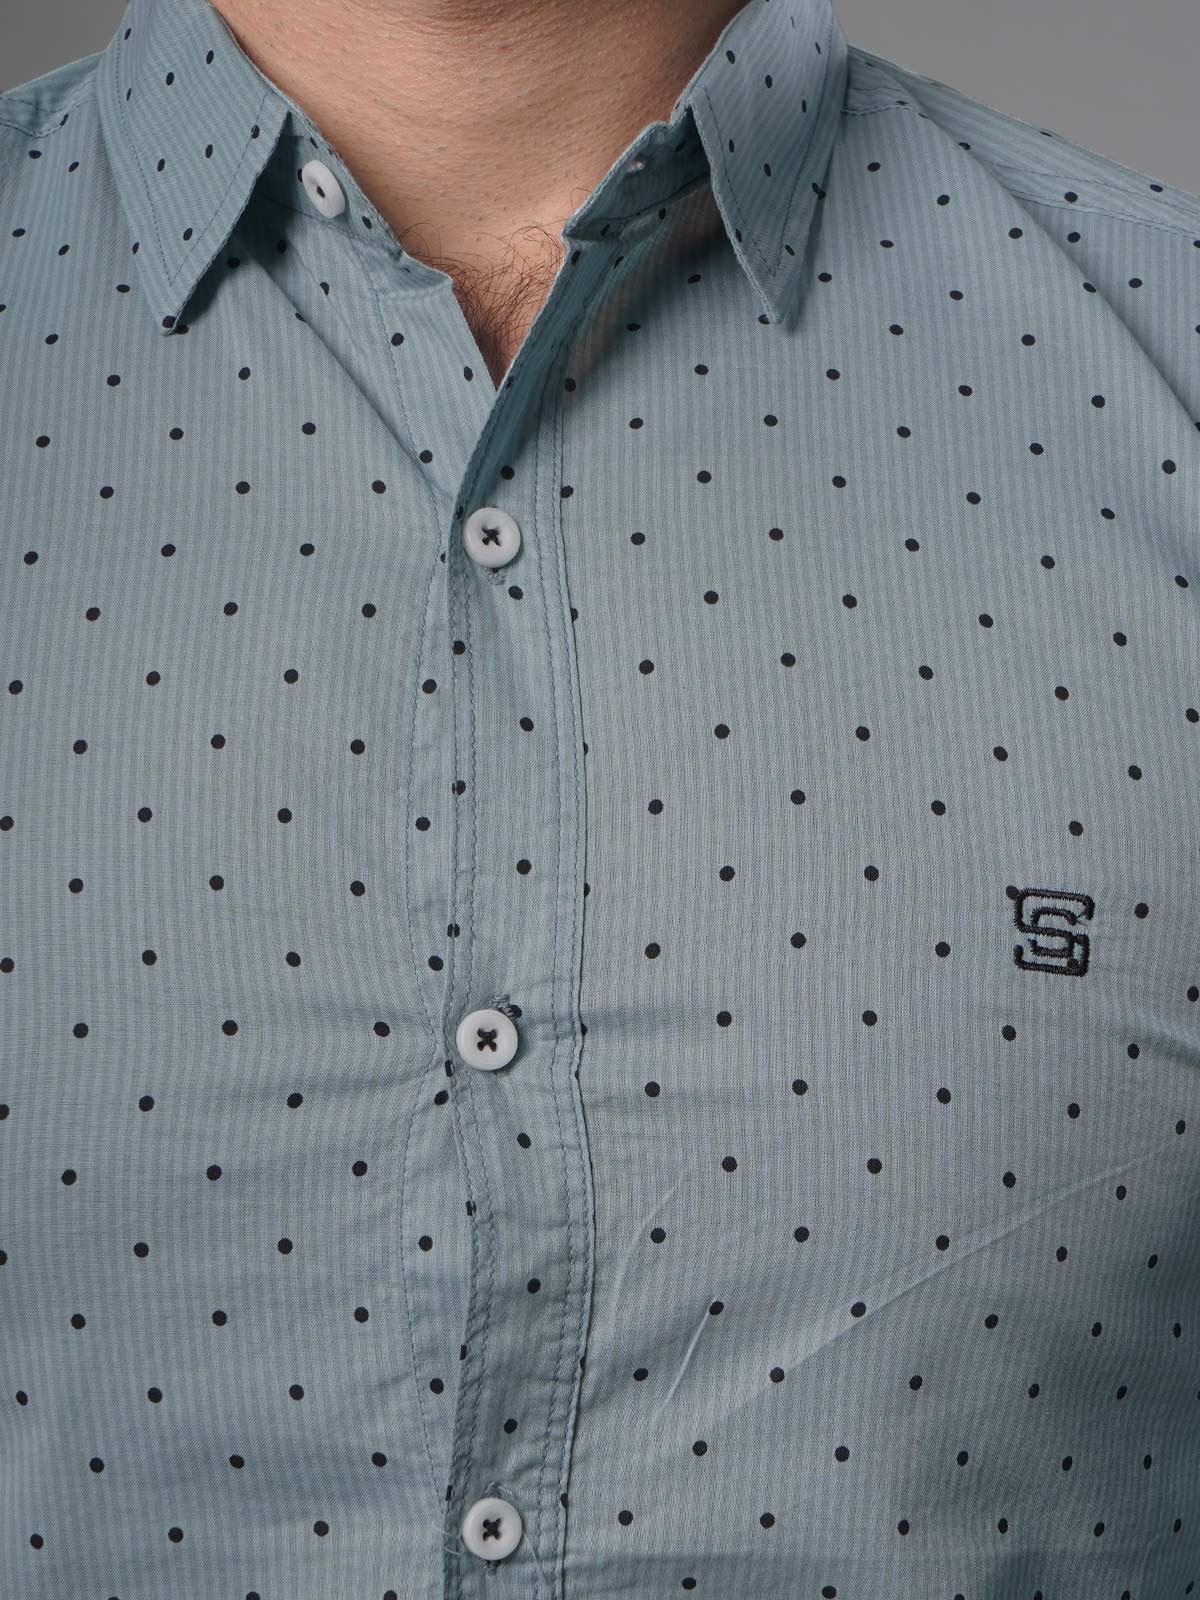 Bluish Grey Printed Casual Shirt (CSP-143)